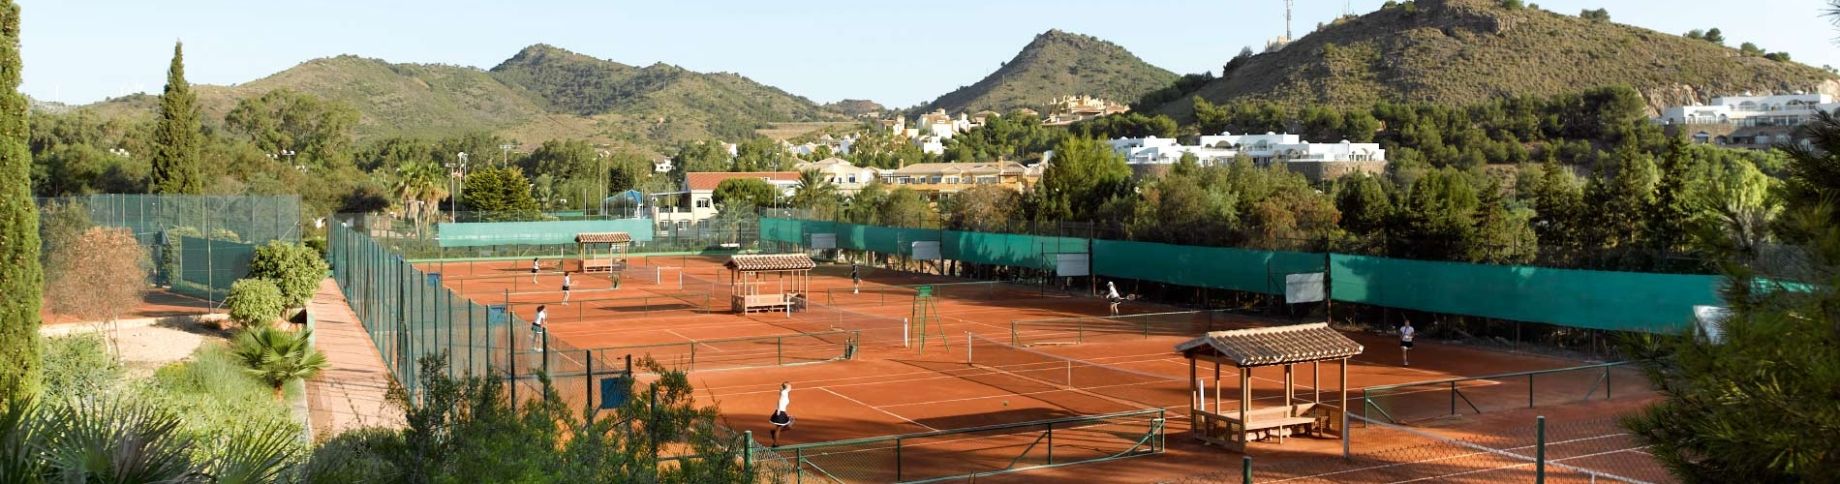 Tennis i Spanien på La Manga 